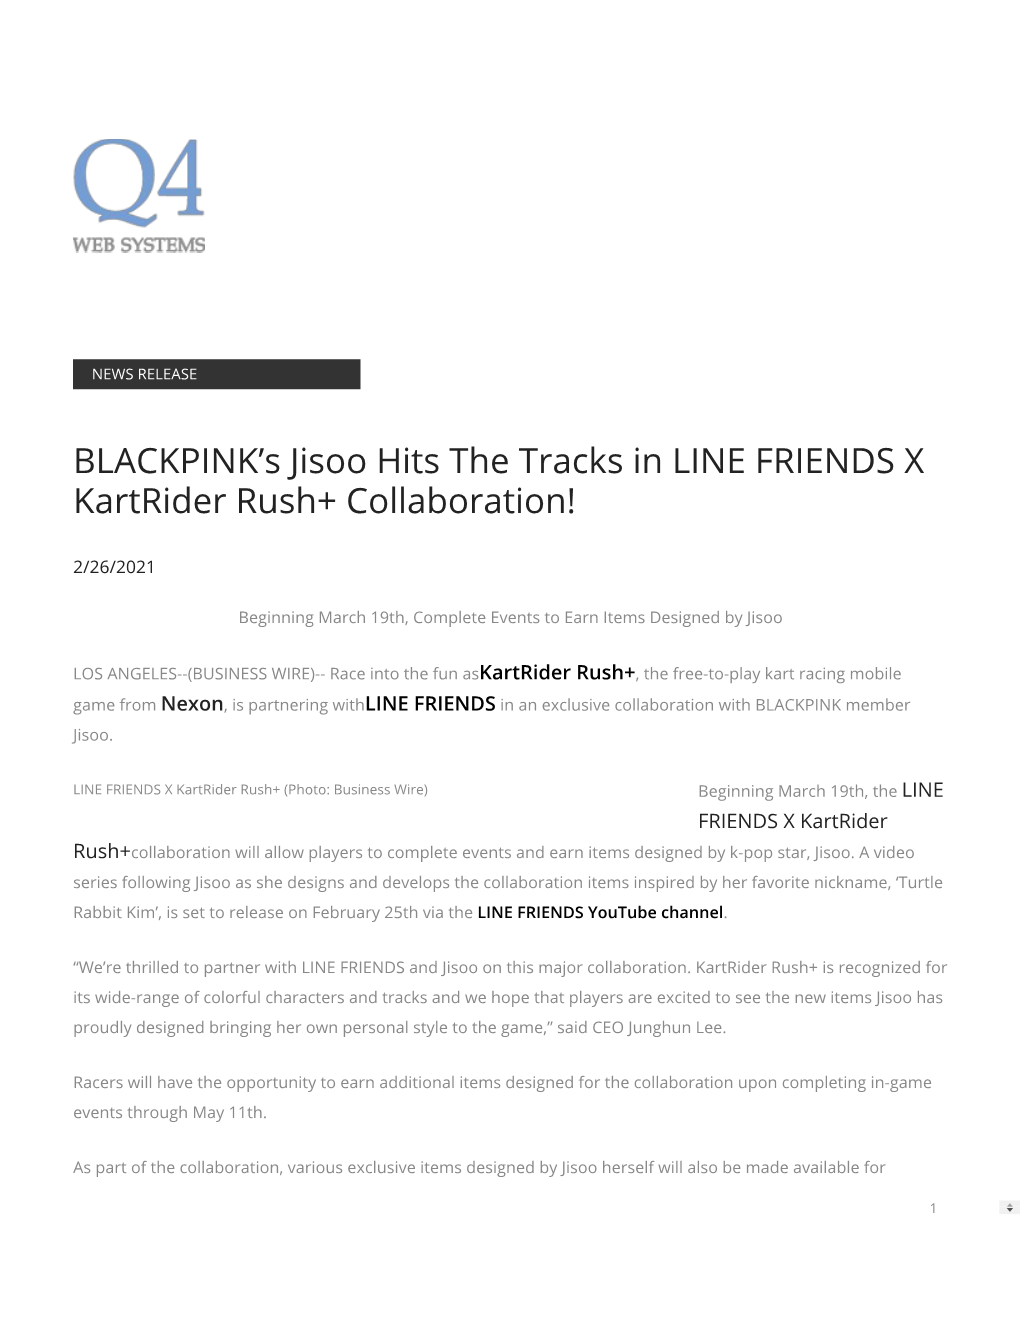 BLACKPINK's Jisoo Hits the Tracks in LINE FRIENDS X Kartrider Rush+